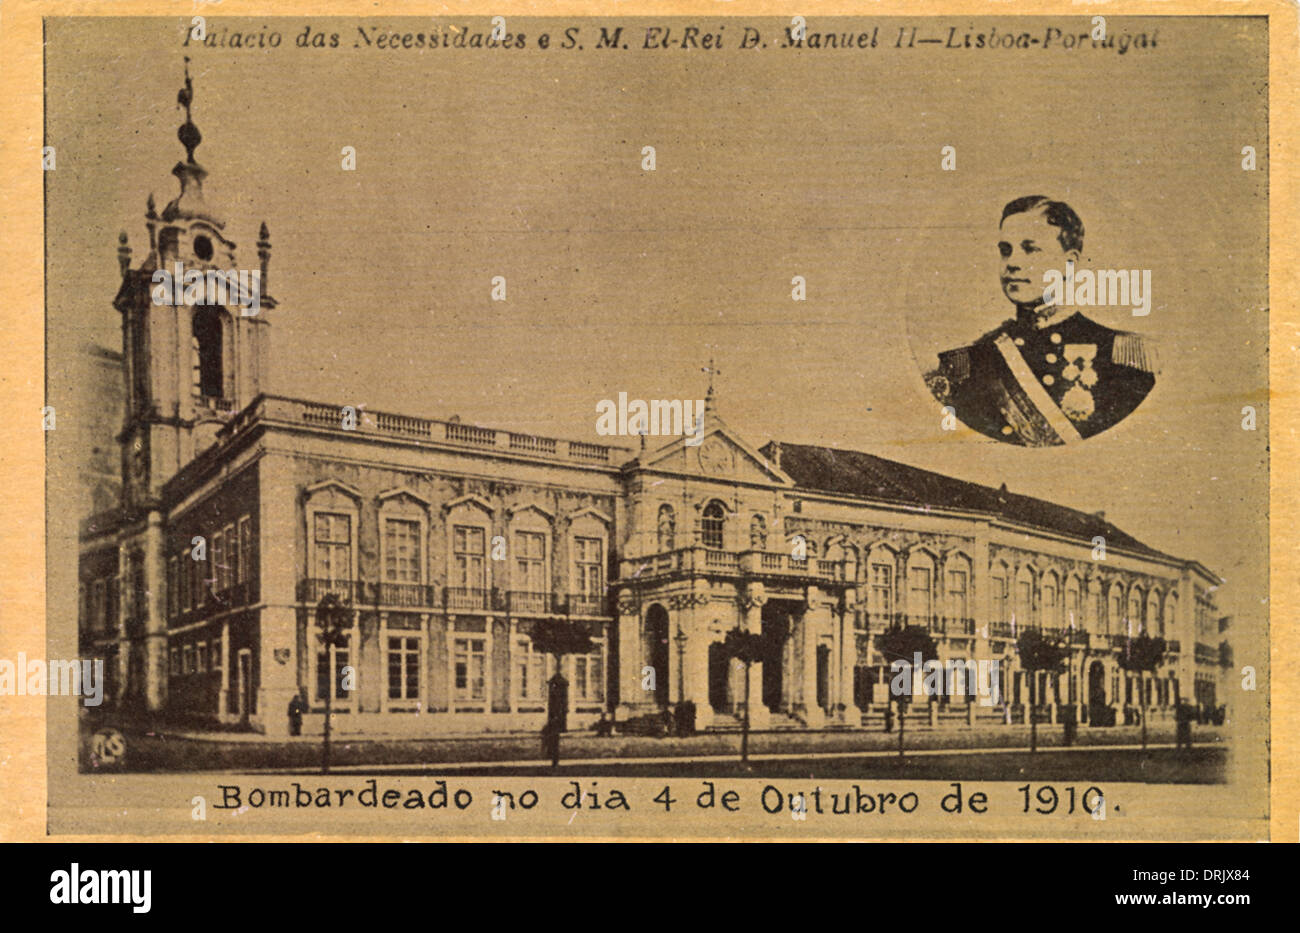 Palace of Necessidades, Lisbon and King Manuel II Stock Photo